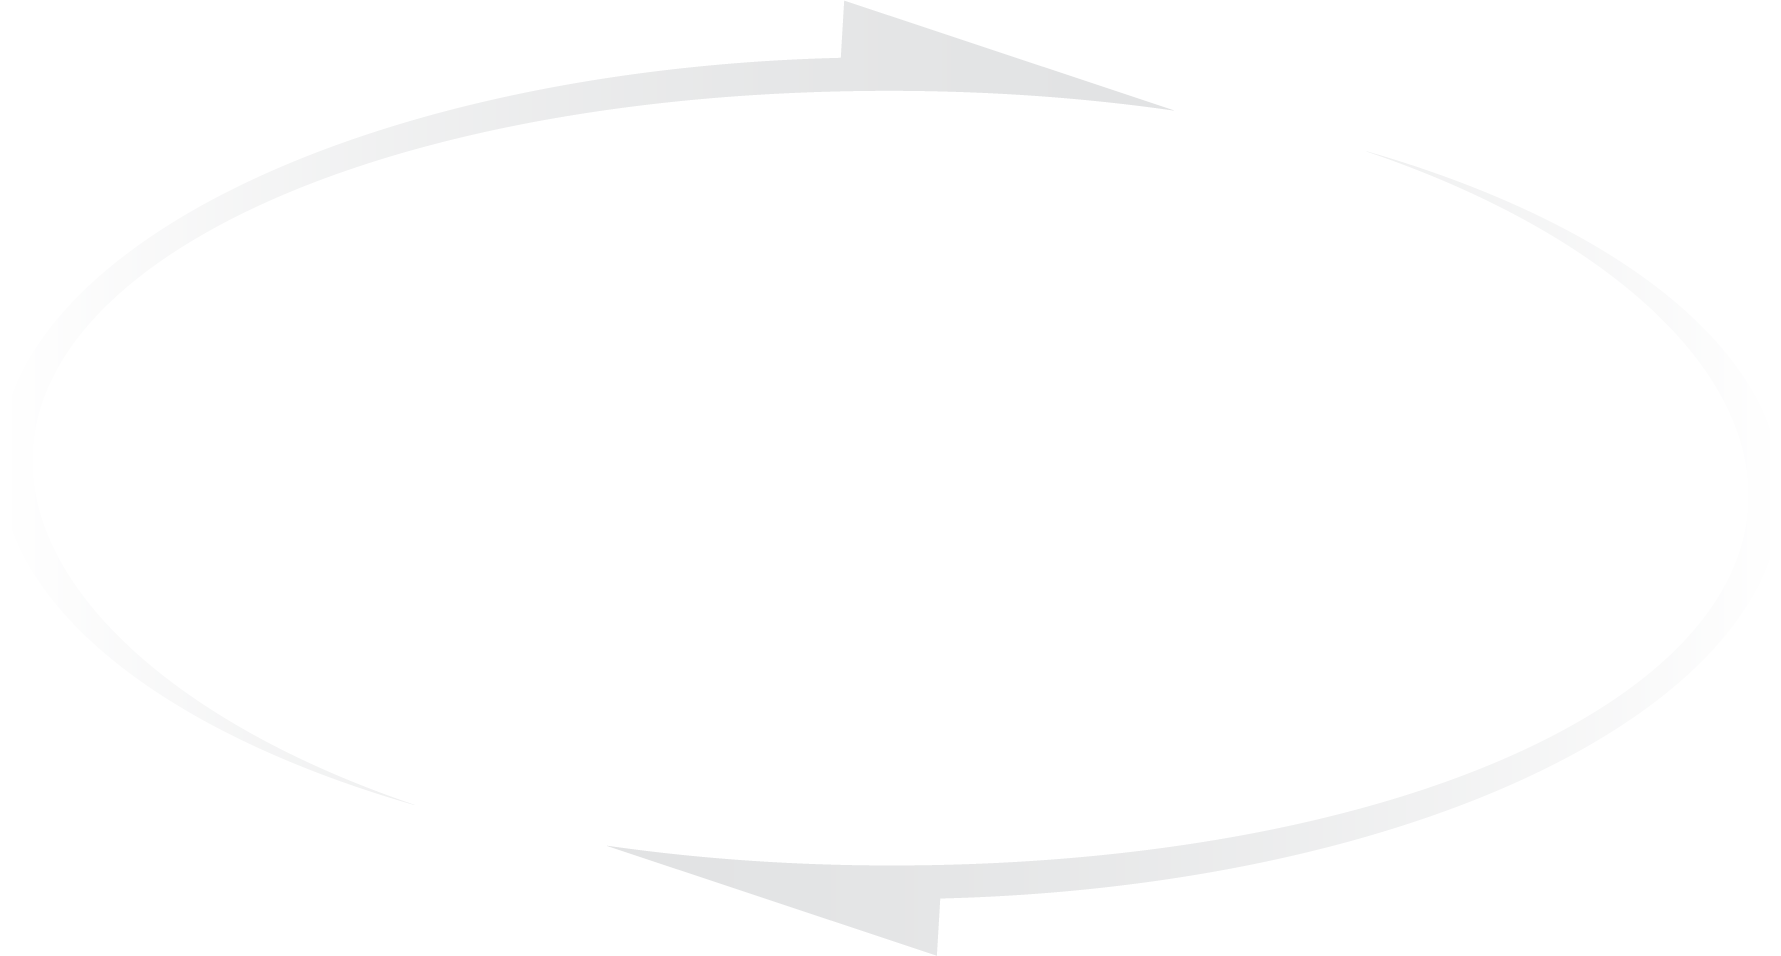 RMX